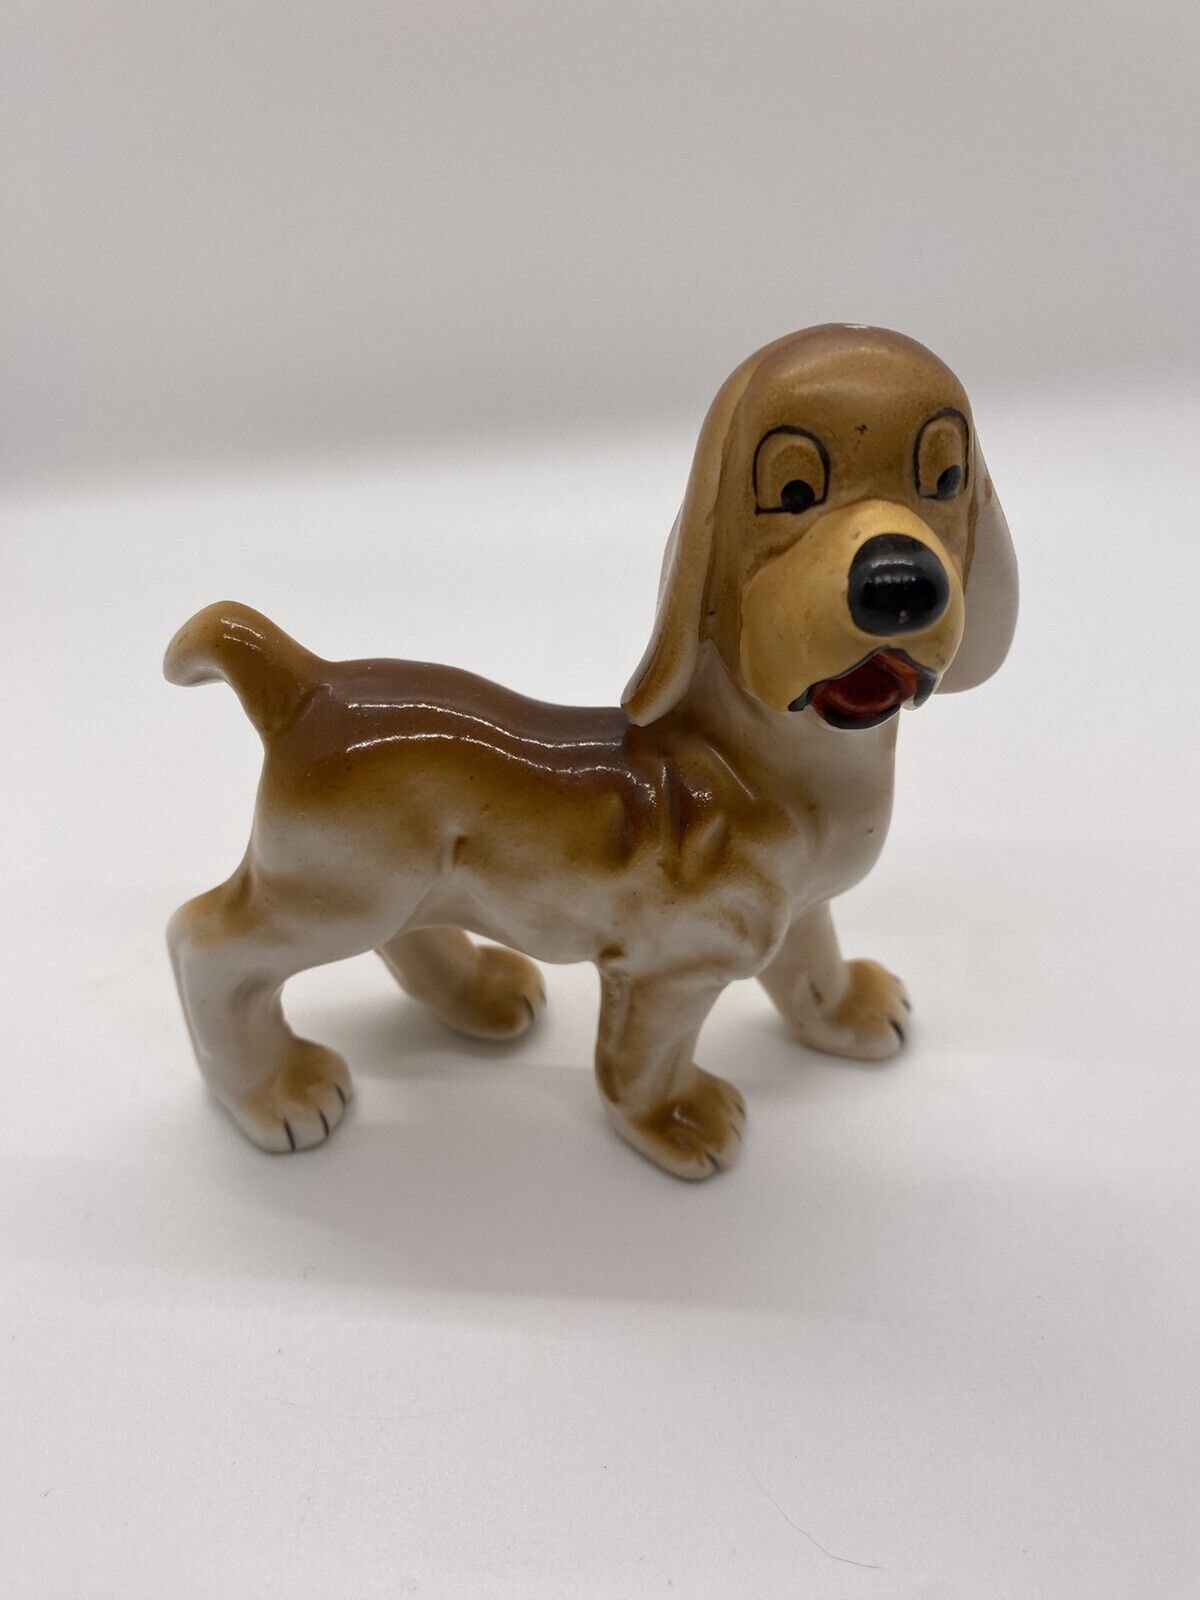 Vintage Japan Ceramic Dog Figurine Long Ears